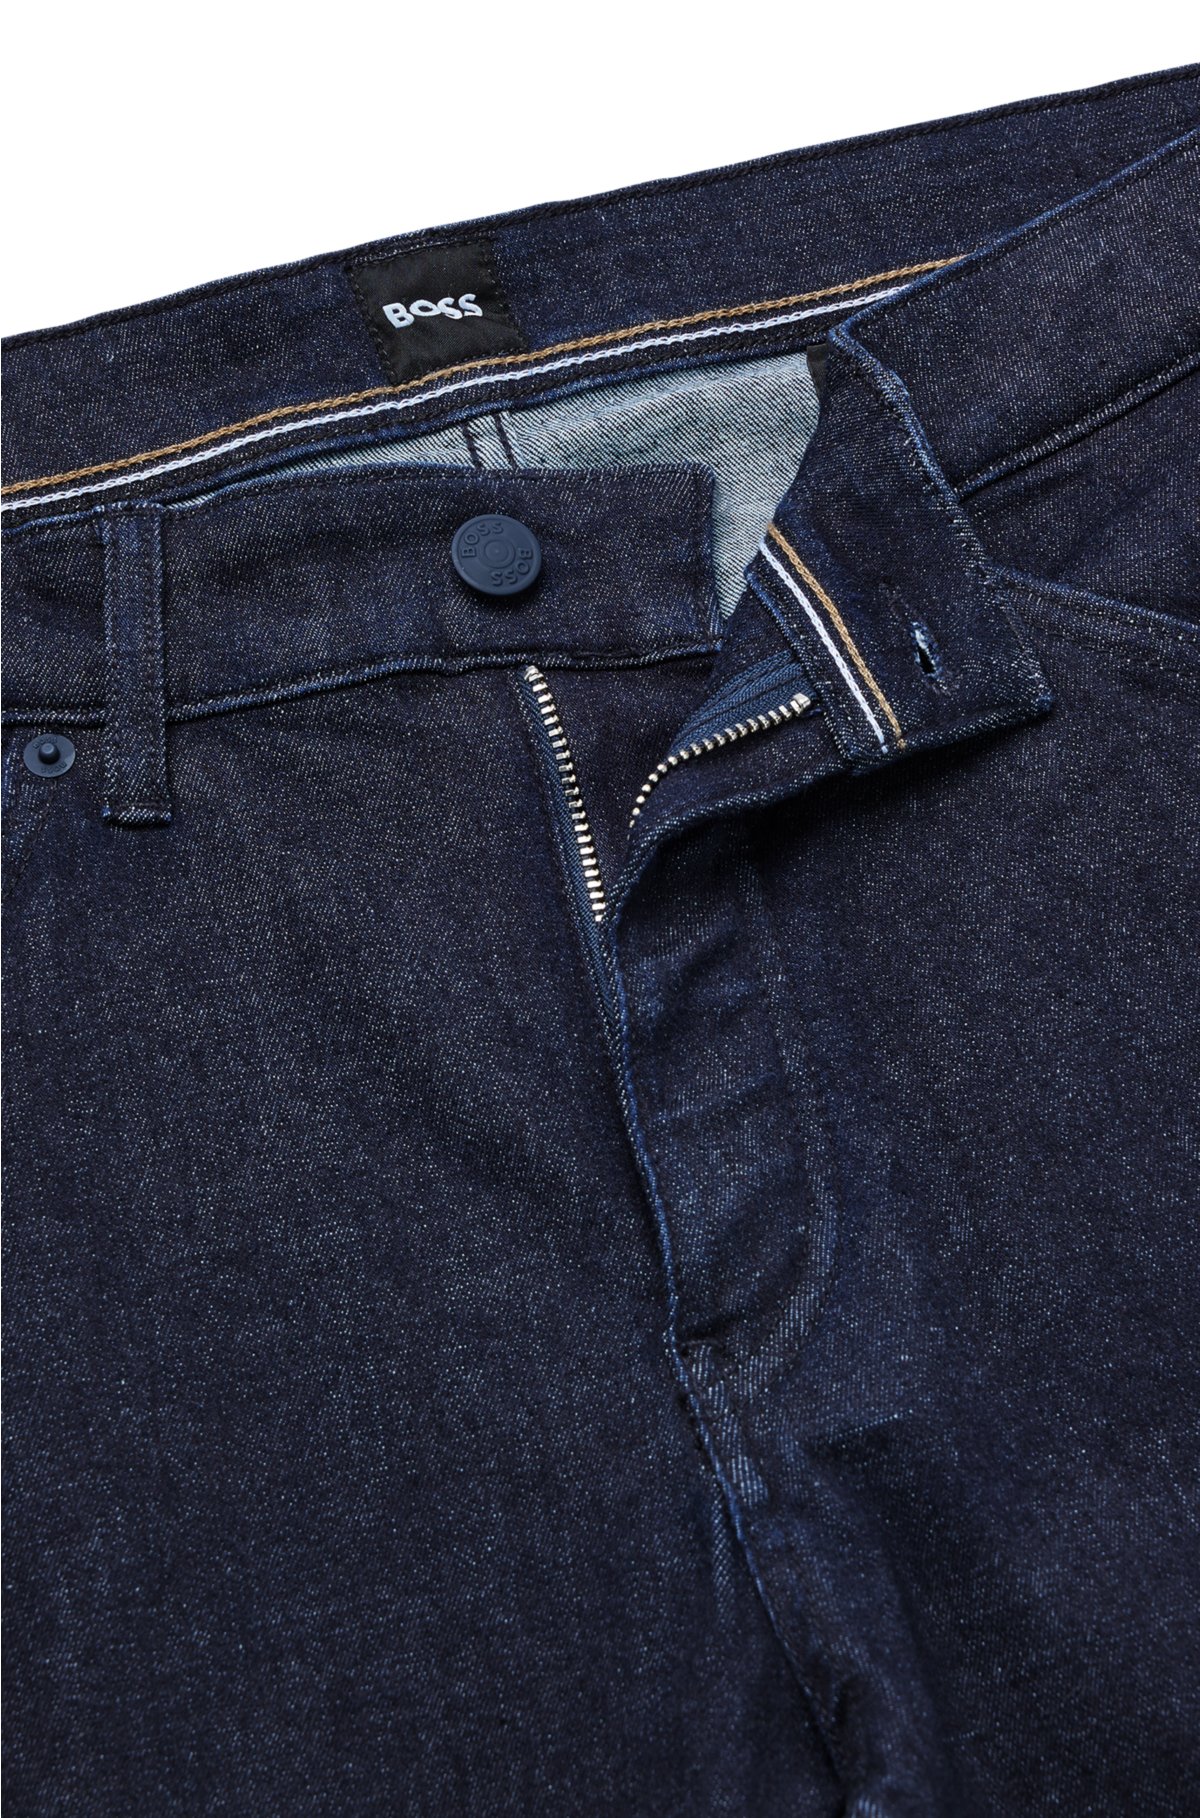 BOSS   Tapered fit jeans in indigo supreme movement denim